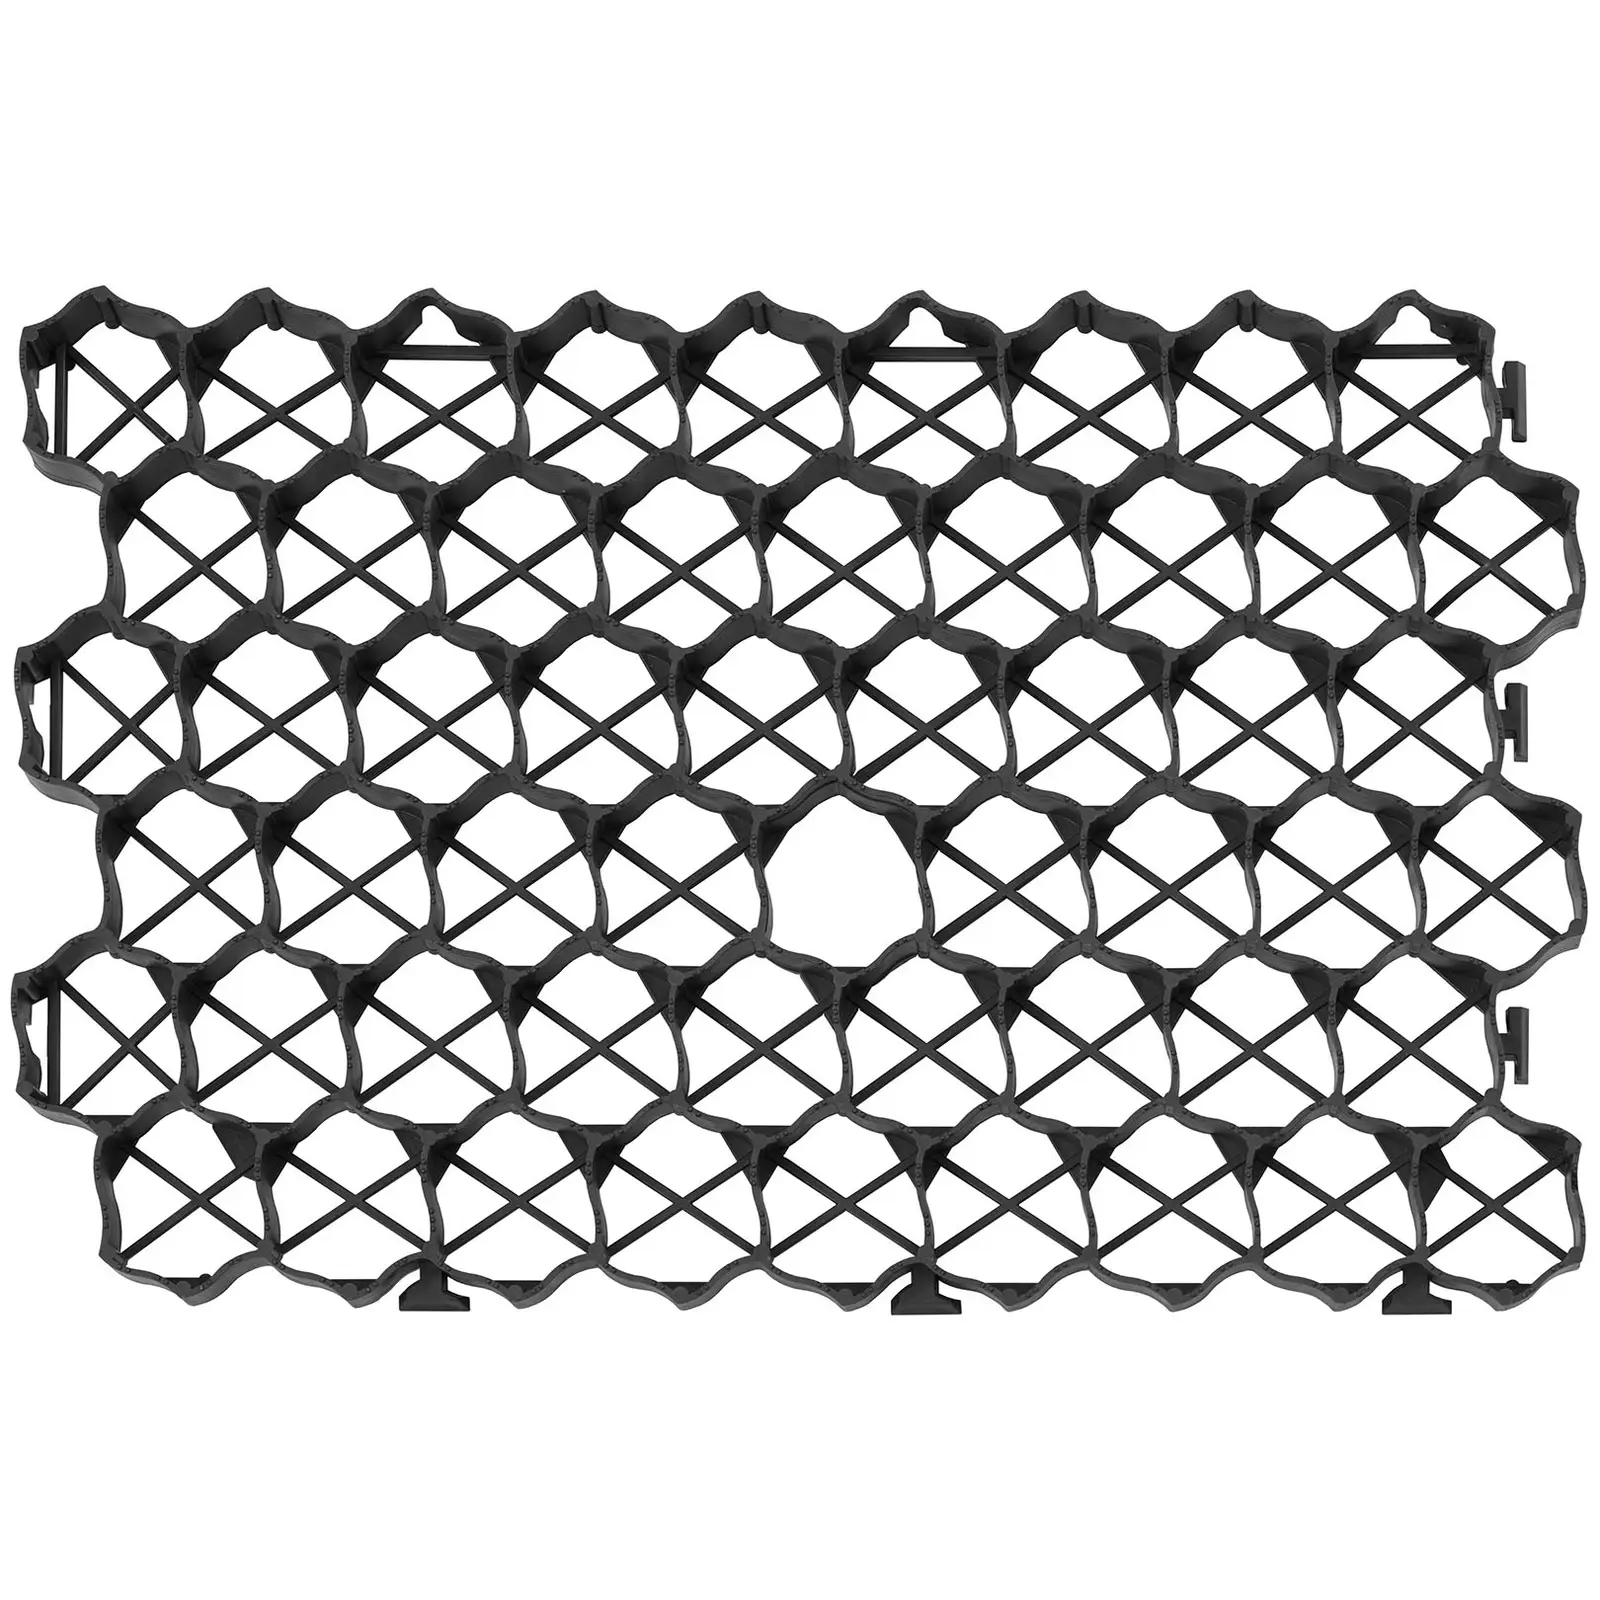 Grass Grid - 60 x 40 x 3 cm - 5 pieces - black